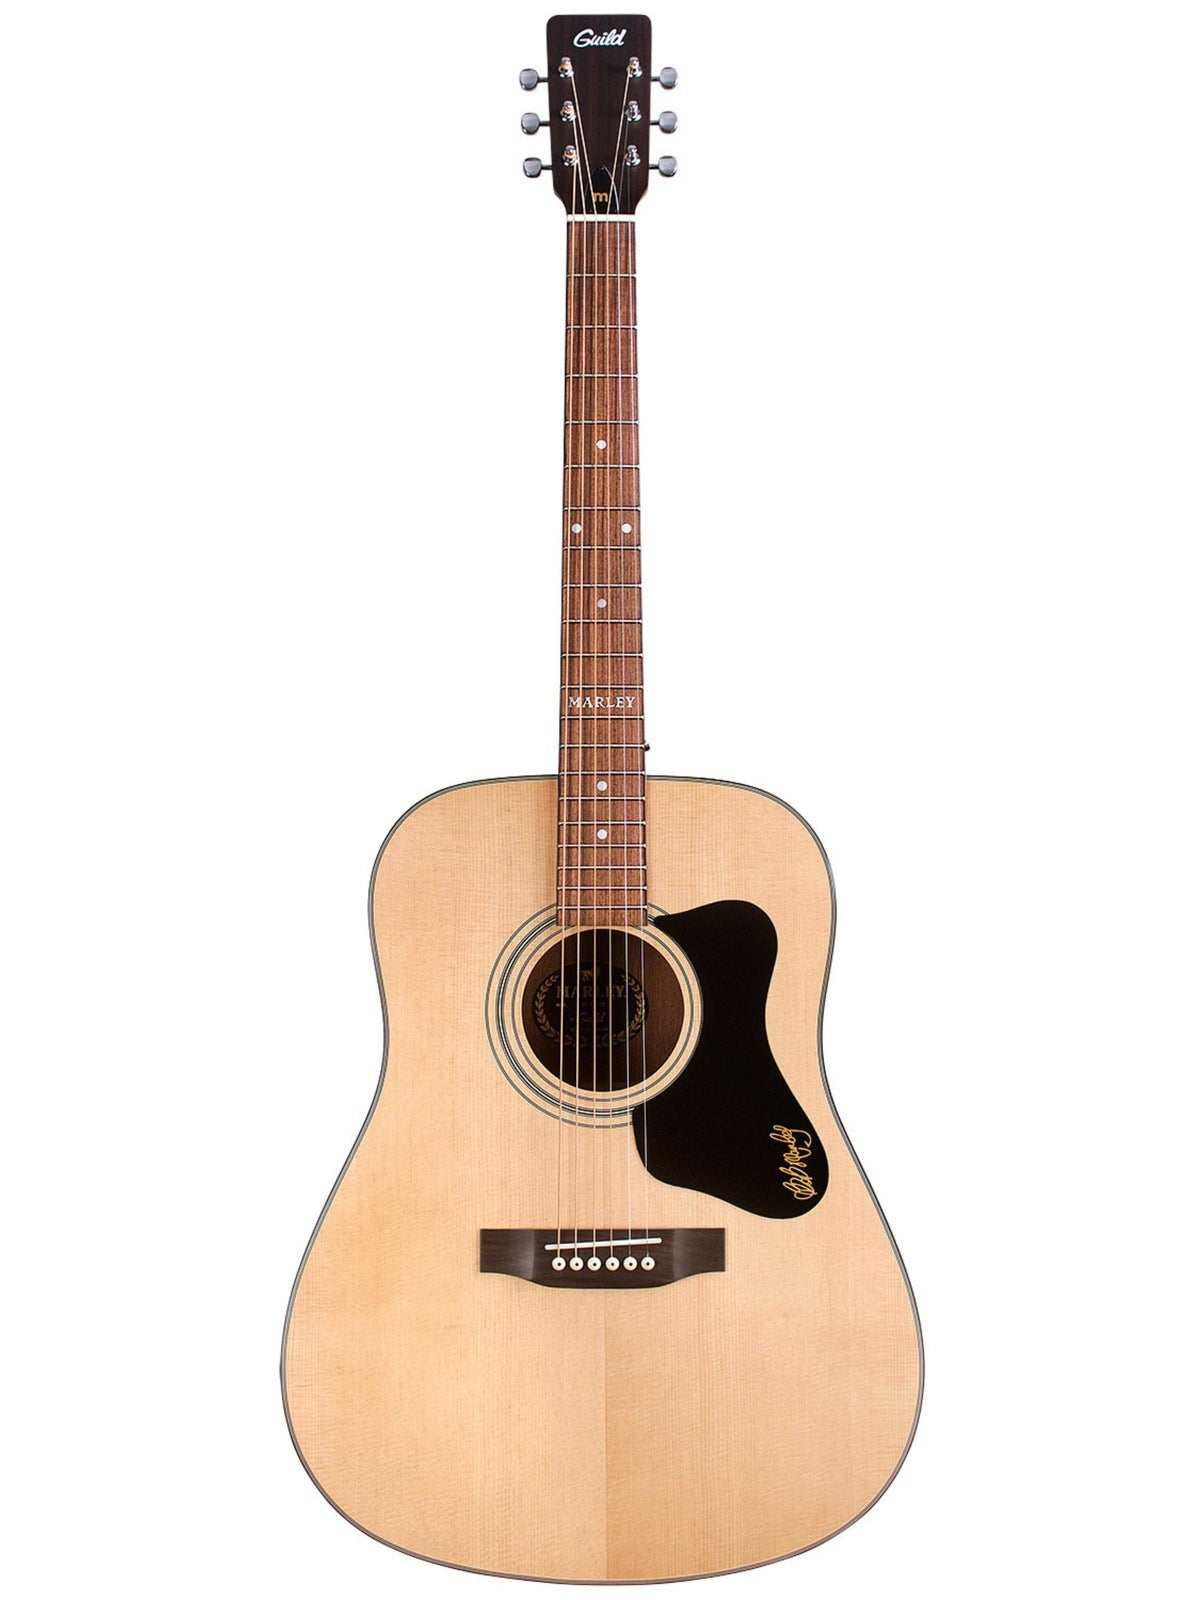 Guild A-20 Marley Acoustic Guitar, Natural